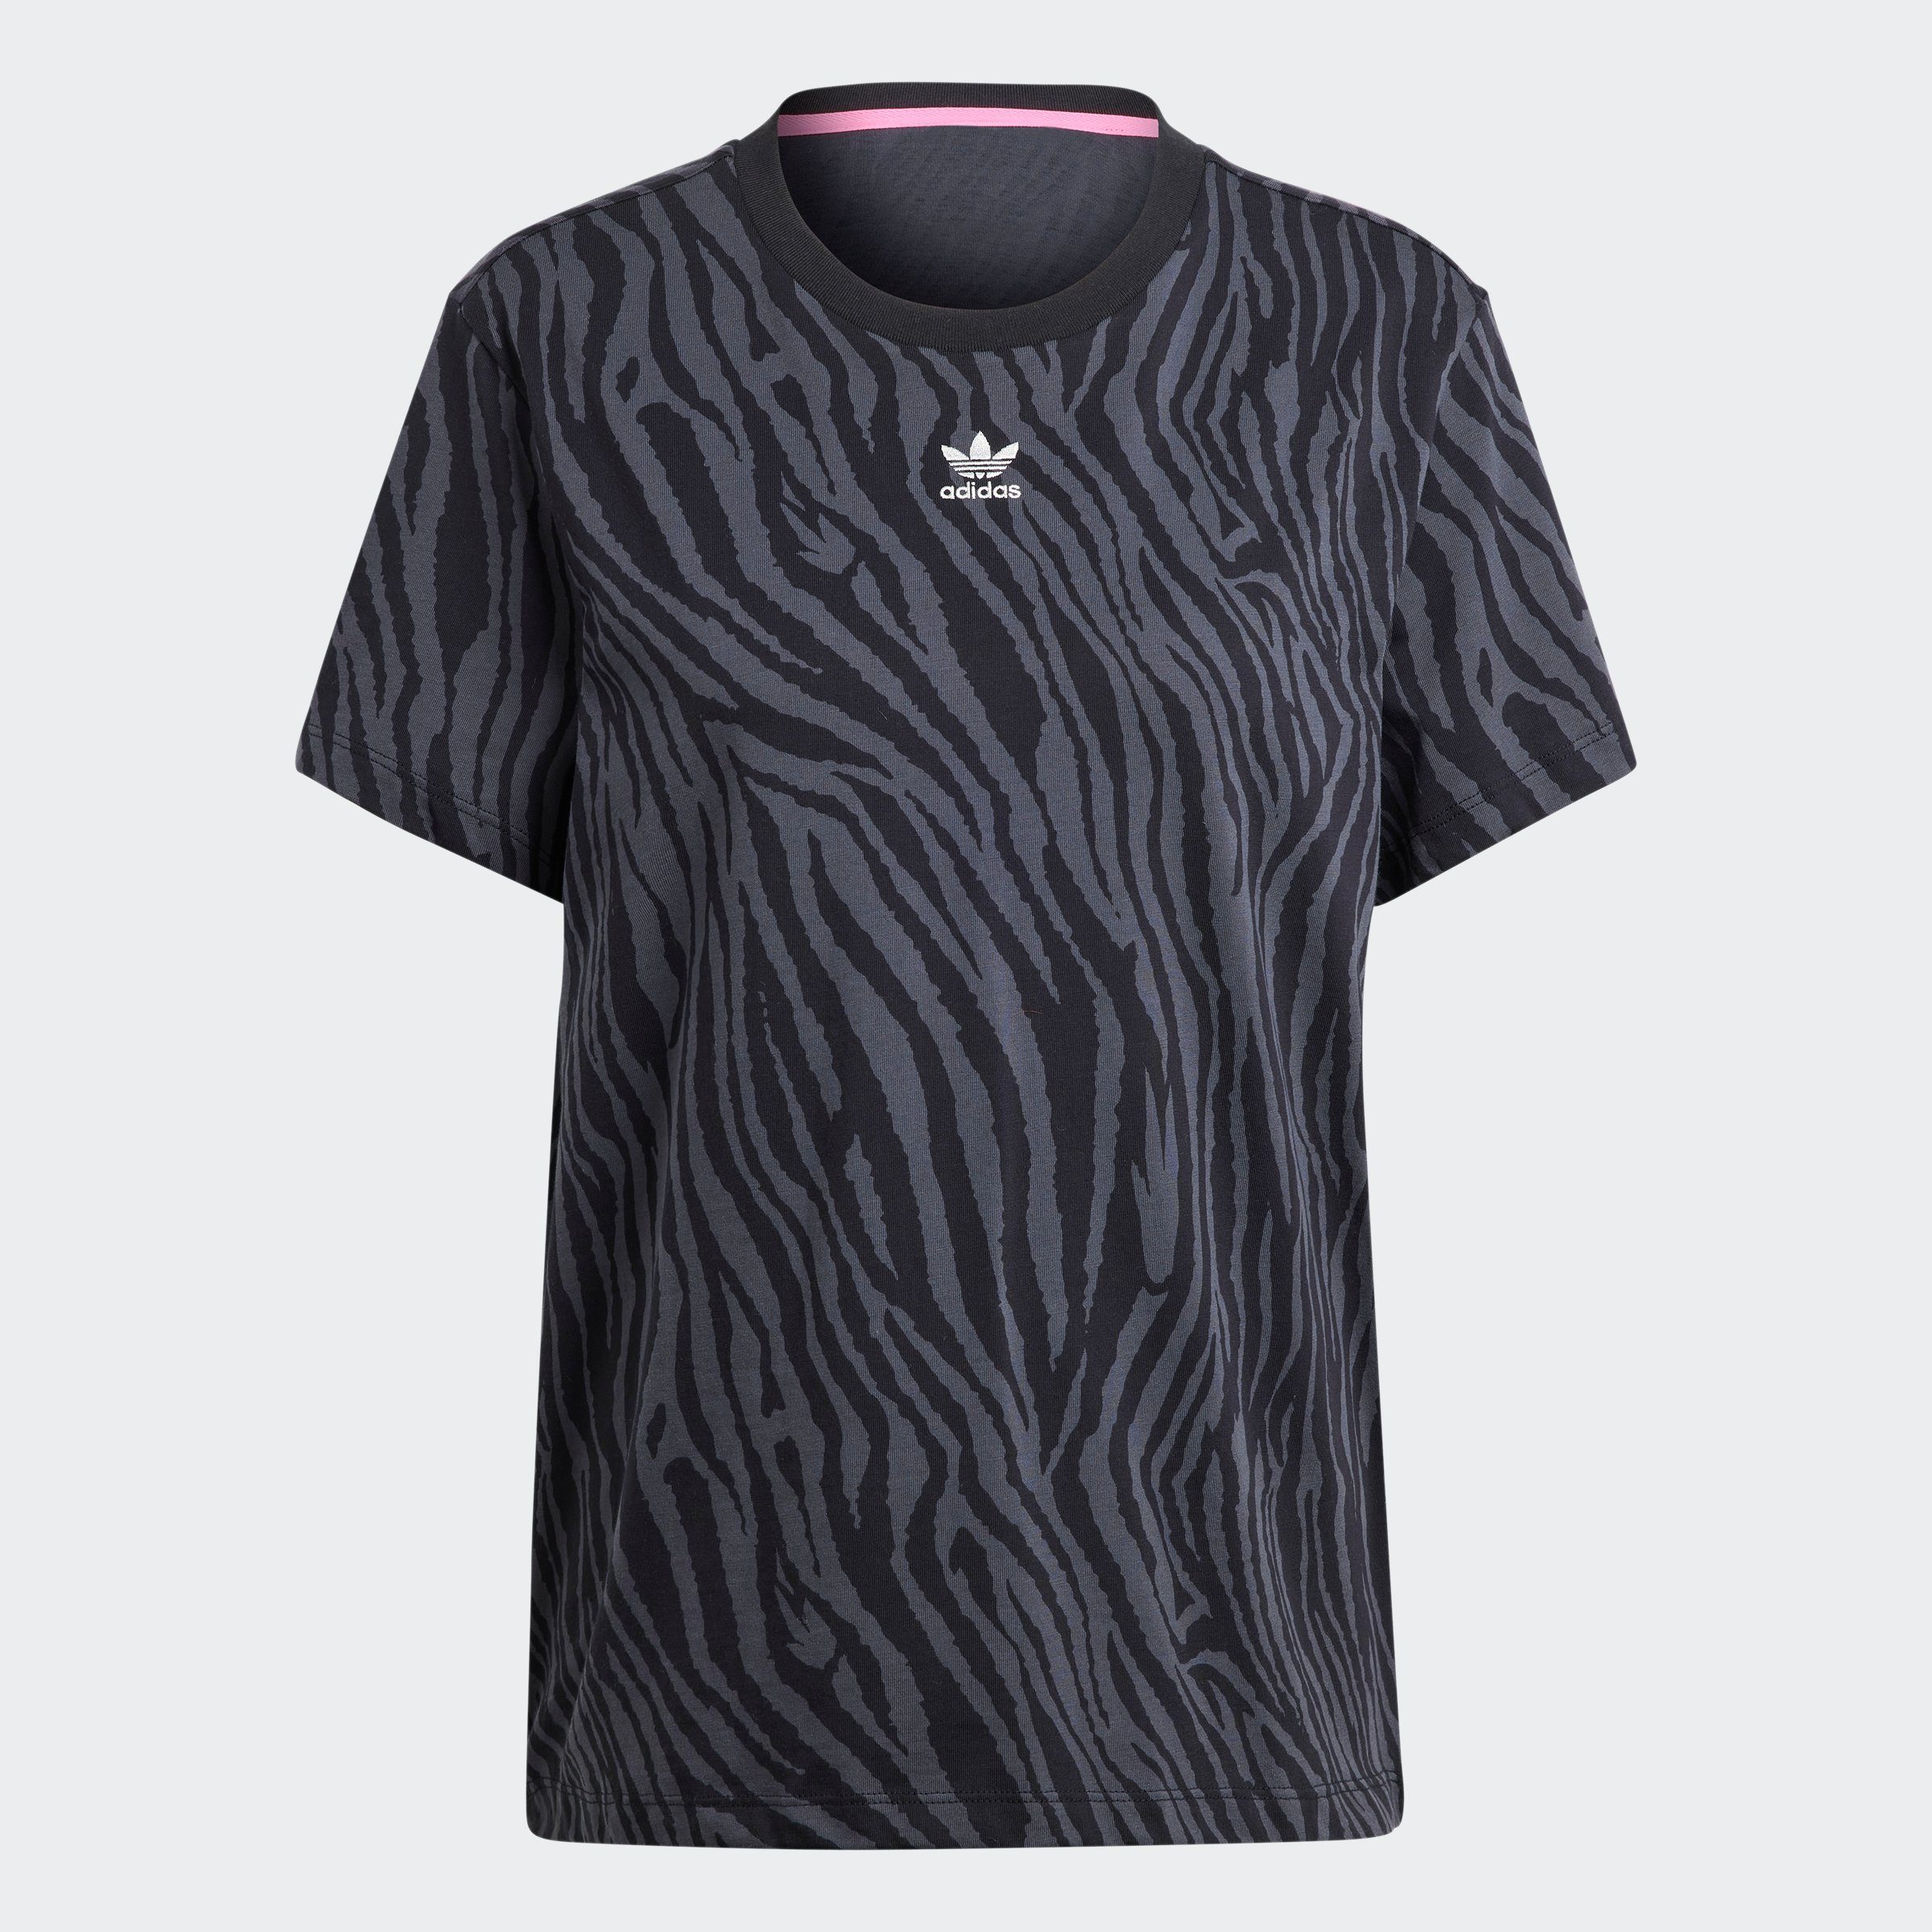 ESSENTIALS ANIMAL ALLOVER ZEBRA Originals T-Shirt adidas PRINT